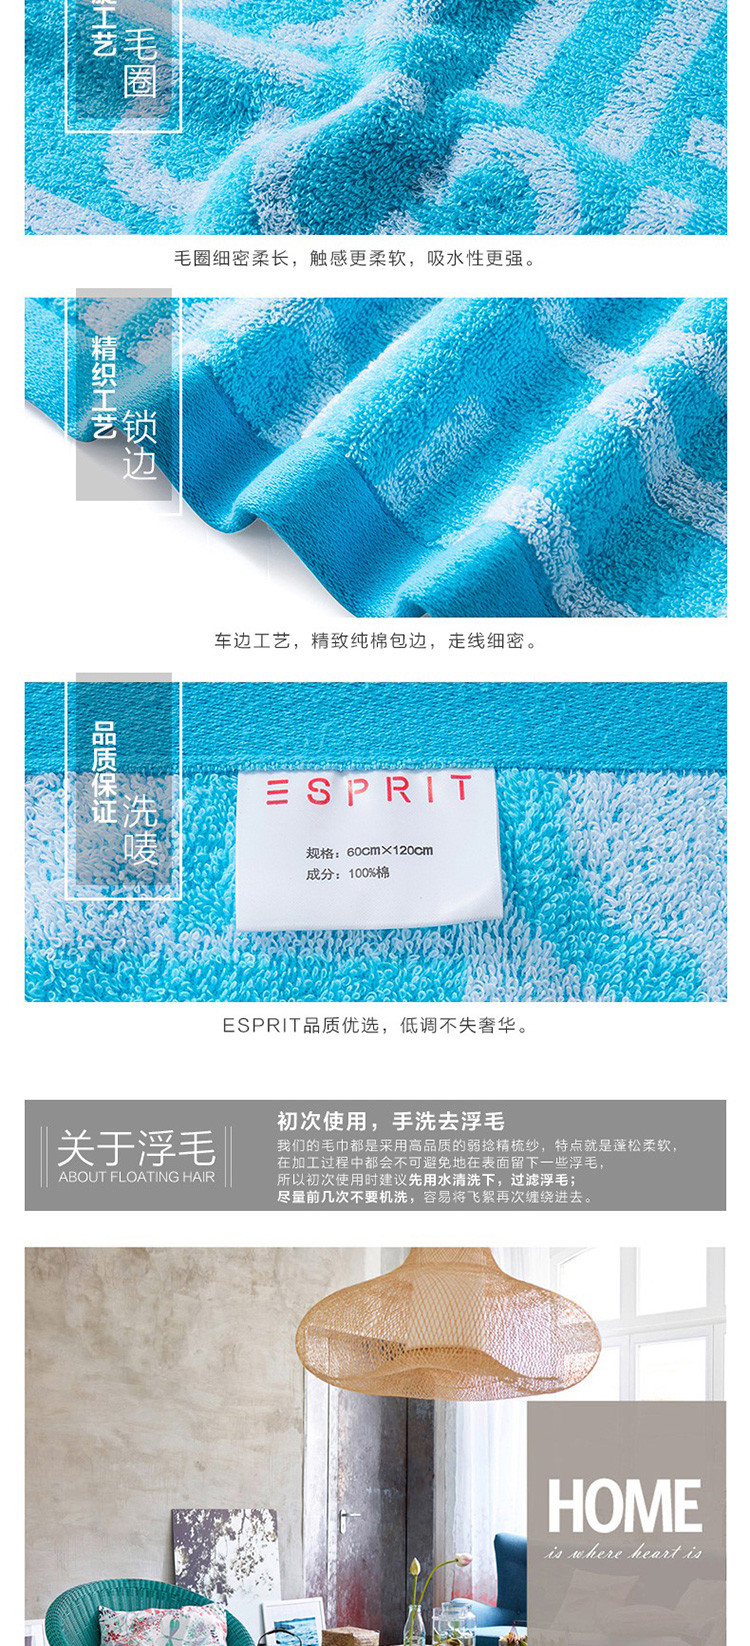 ESPRIT 纯棉柔软方巾面巾浴巾TL88组合装 一方一面一浴  运动健身吸水吸汗